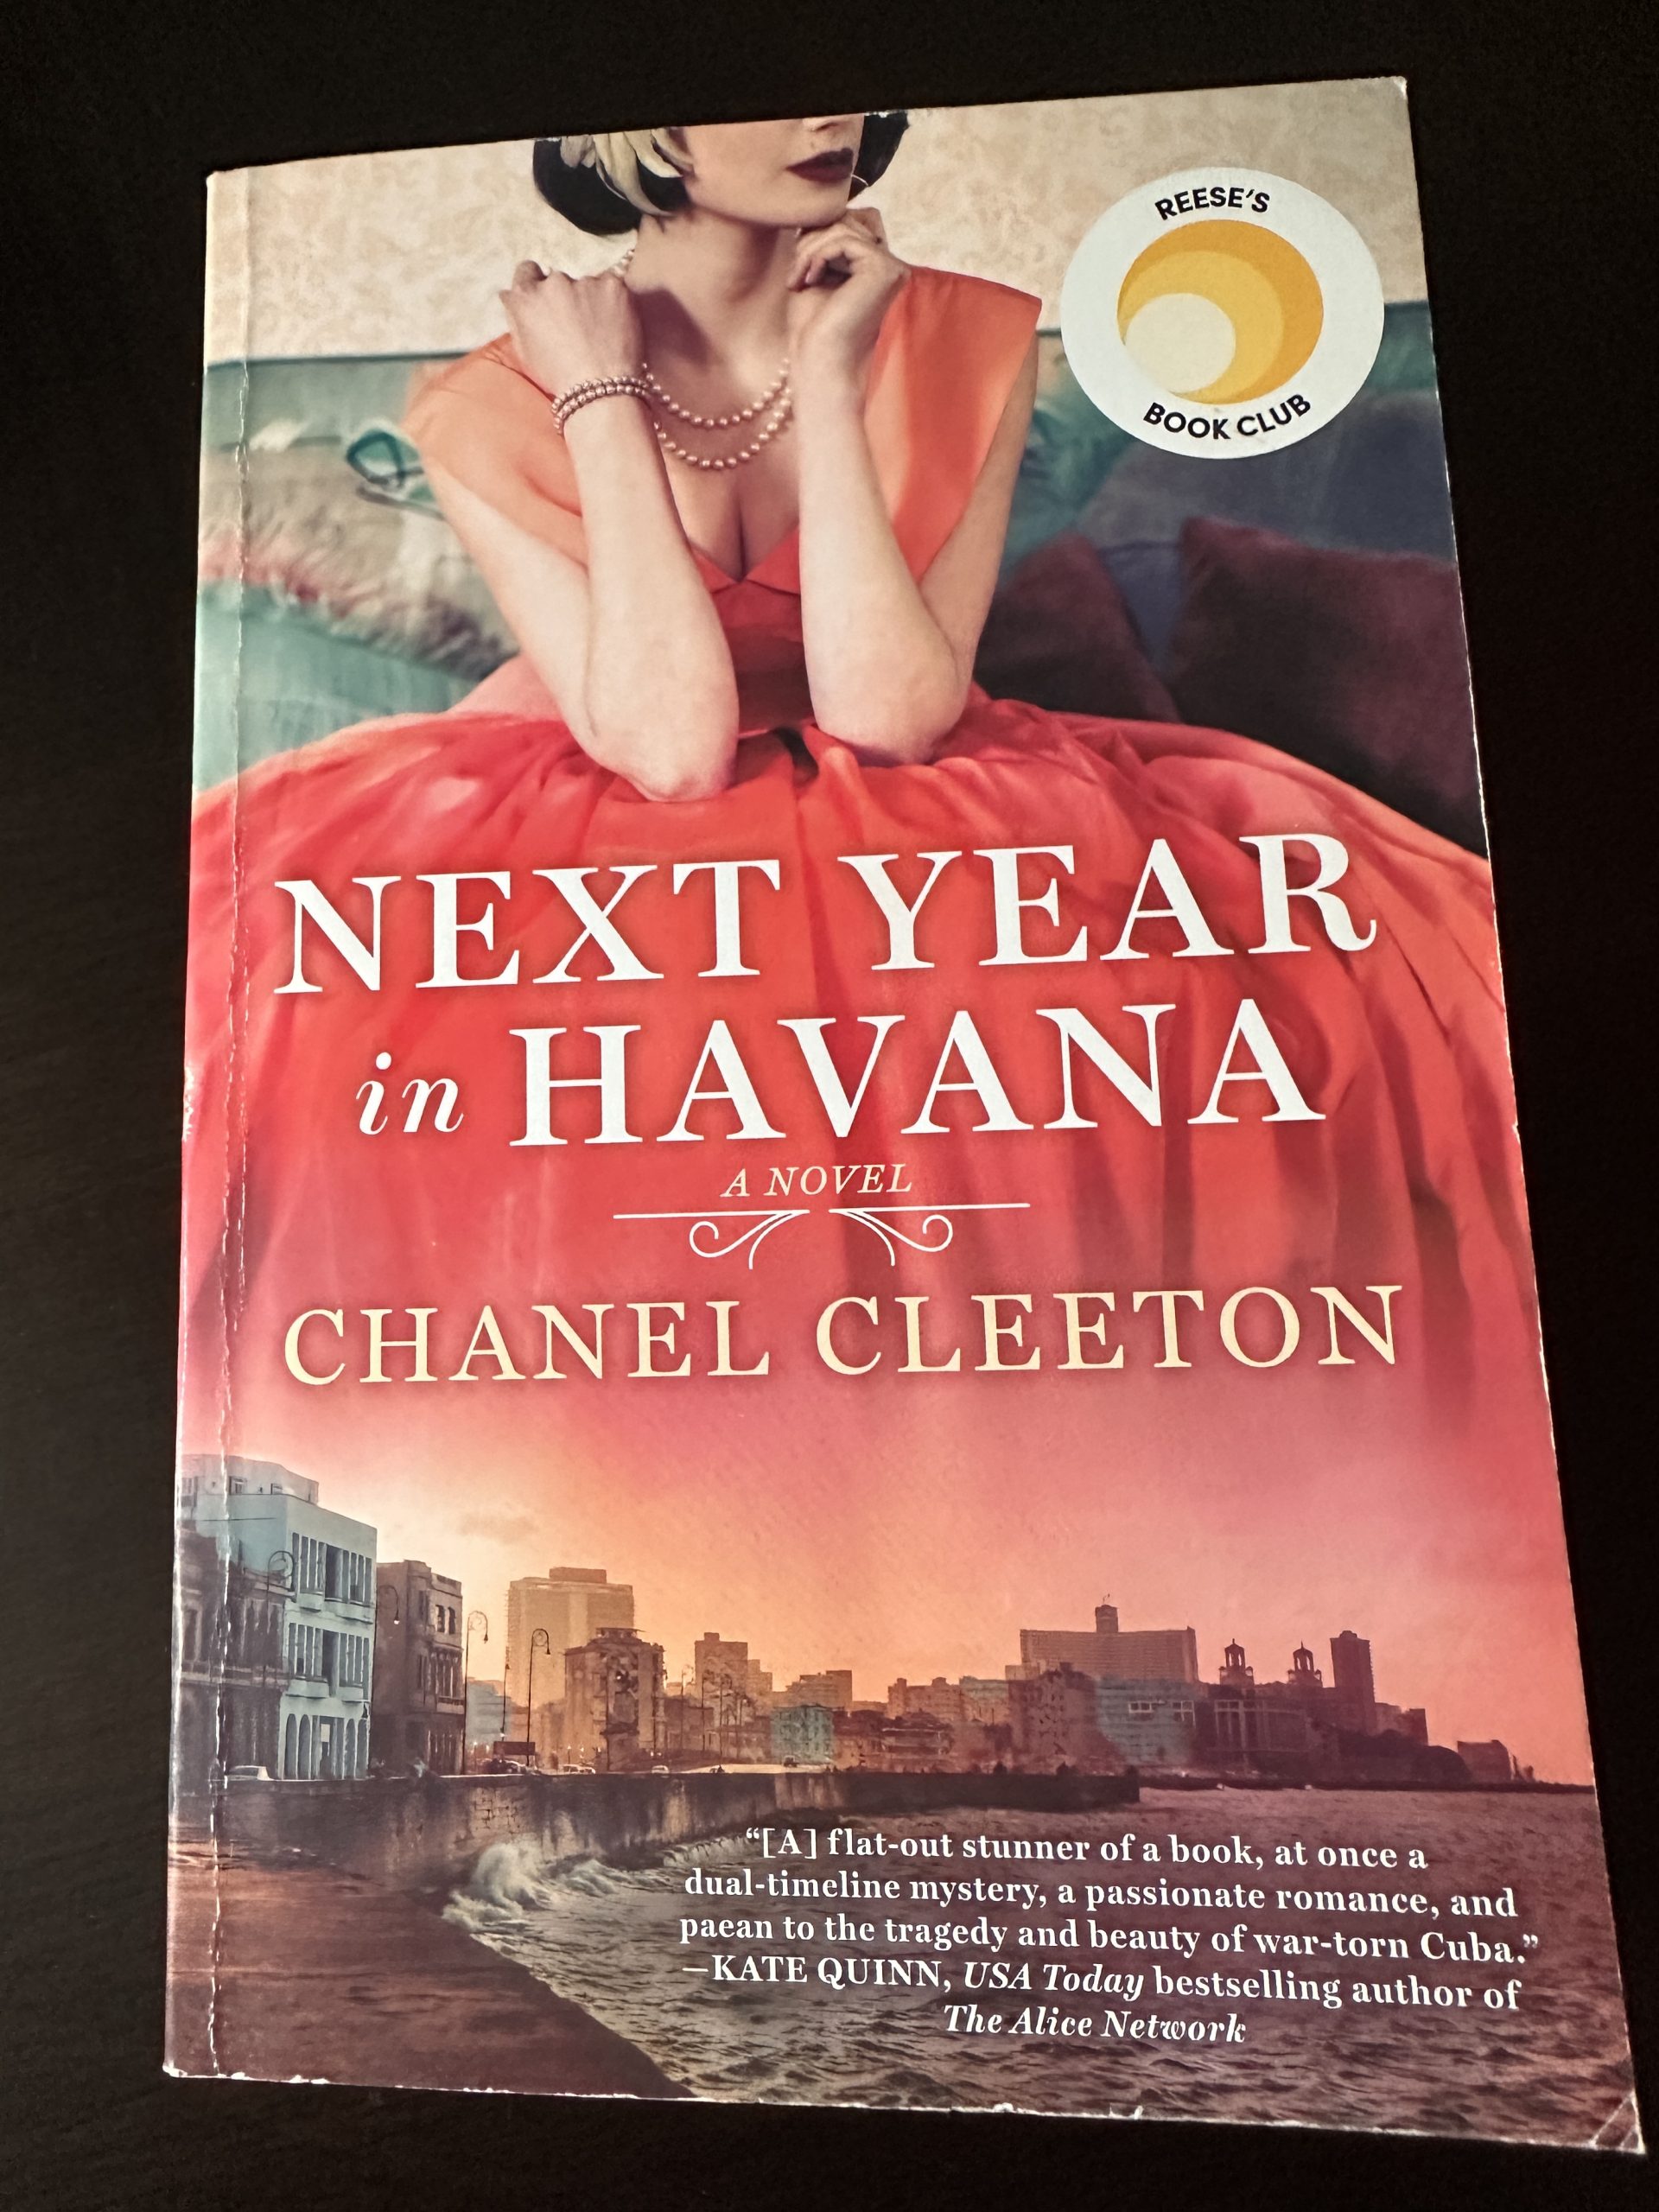 Next Year in Havana by Chanel Cleeton